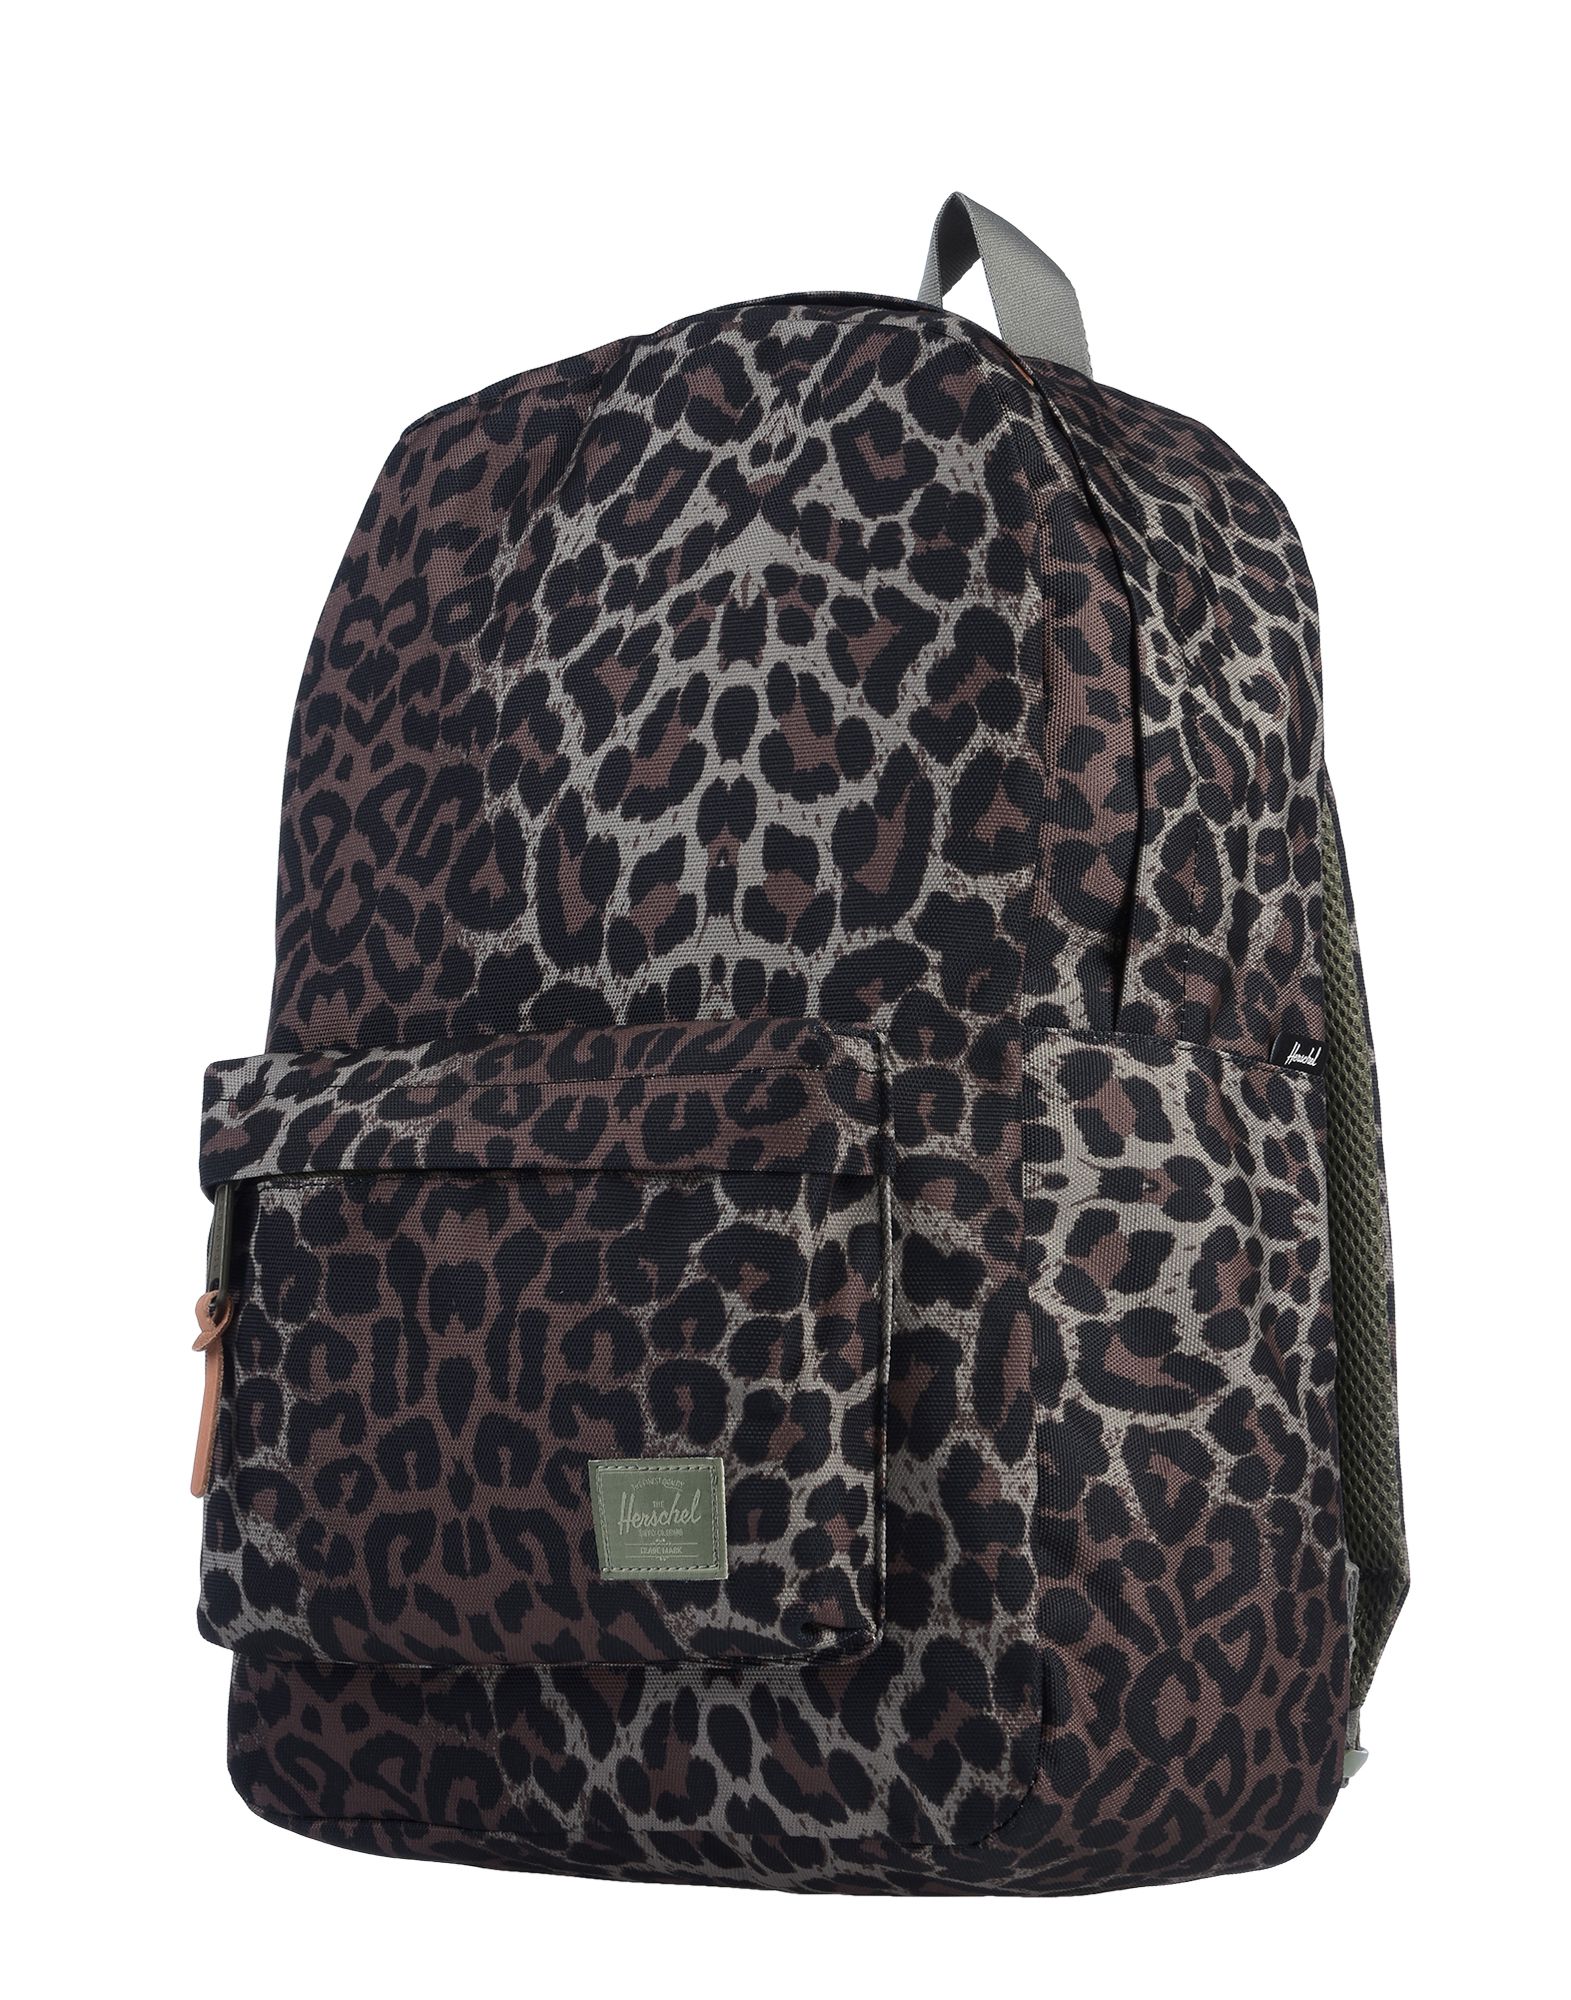 HERSCHEL SUPPLY CO Backpack & fanny pack,45402999QE 1